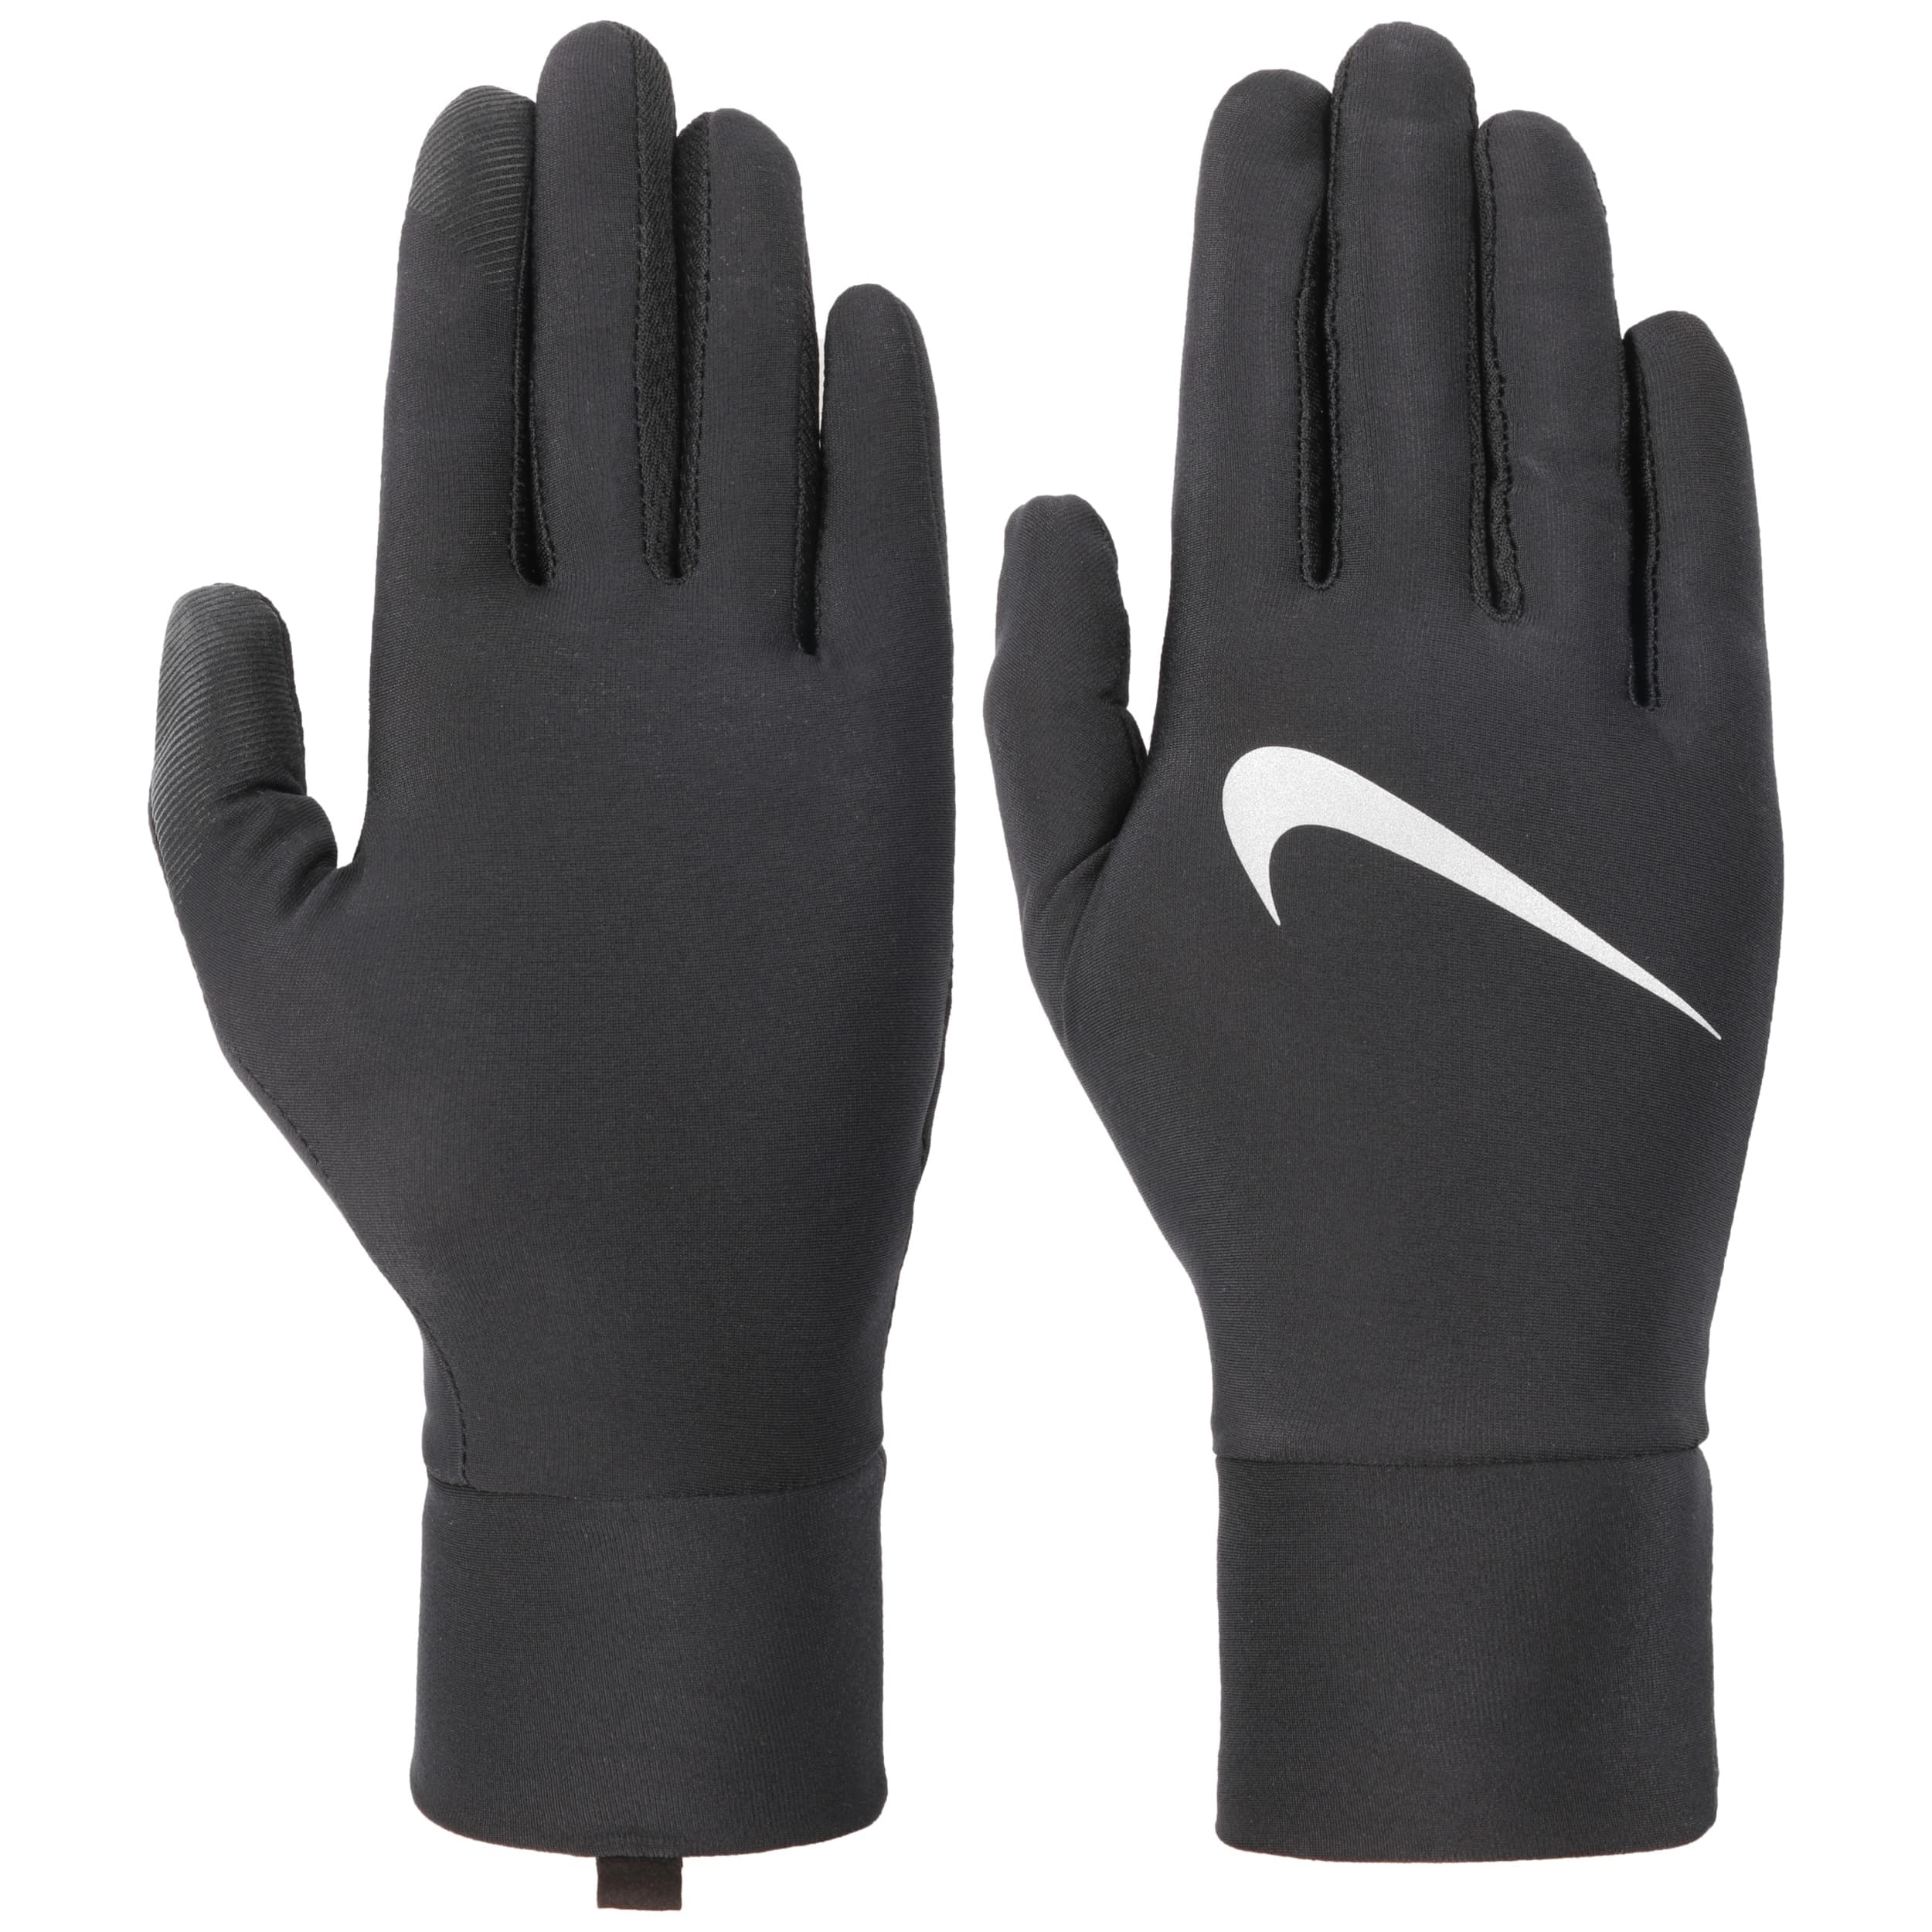 nike leather gloves black